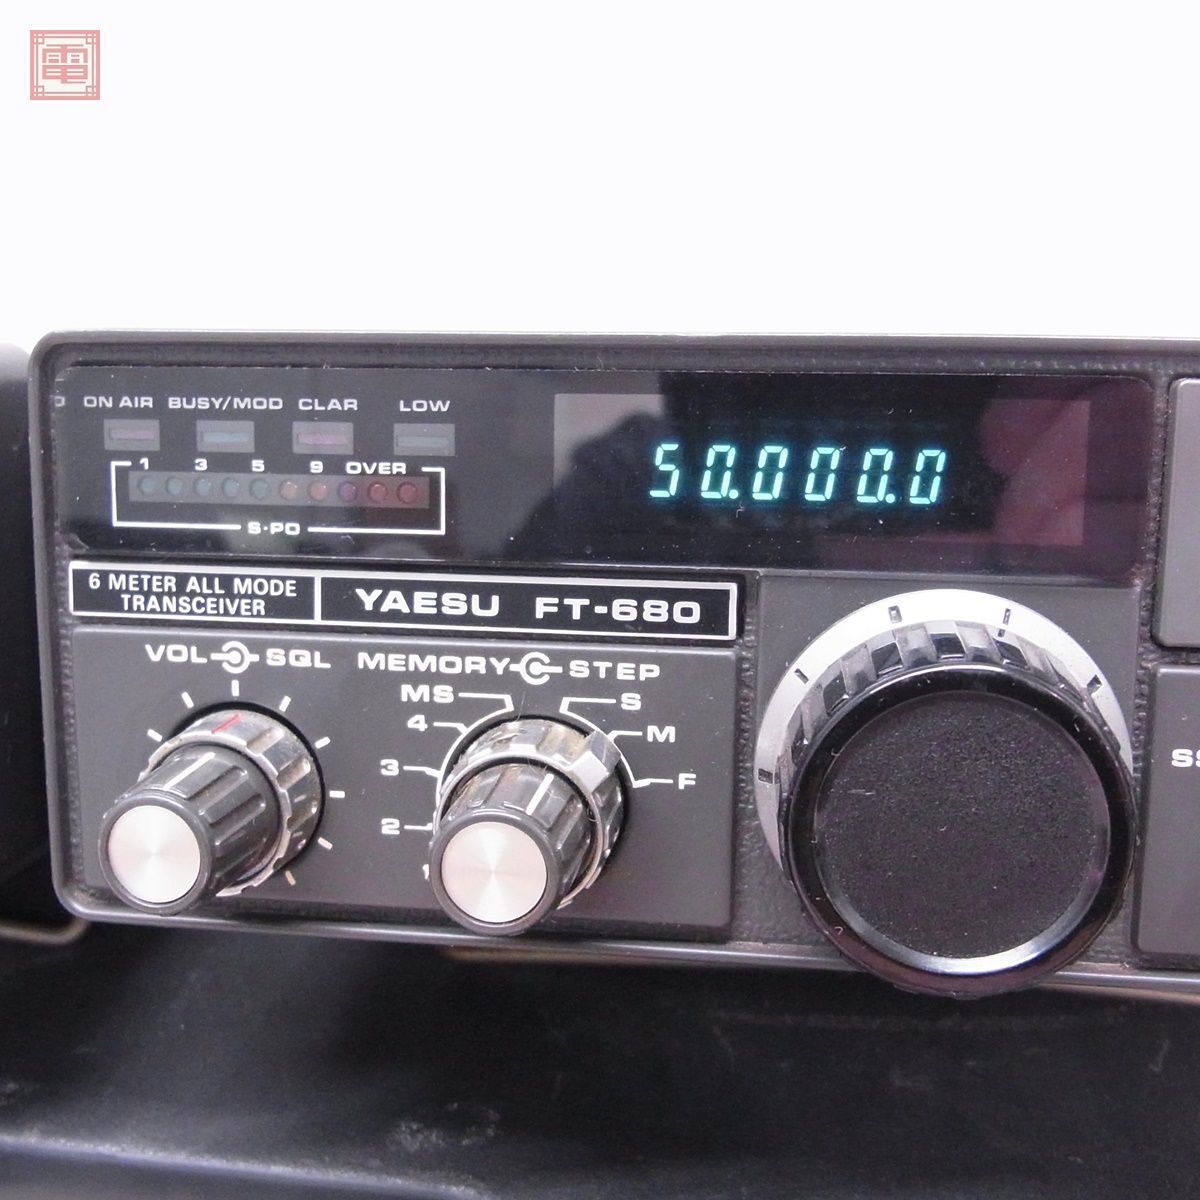 * Yaesu TRANSCEIVER FT-280/FT-680 transceiver Yaesu YAESU electrification only verification [20